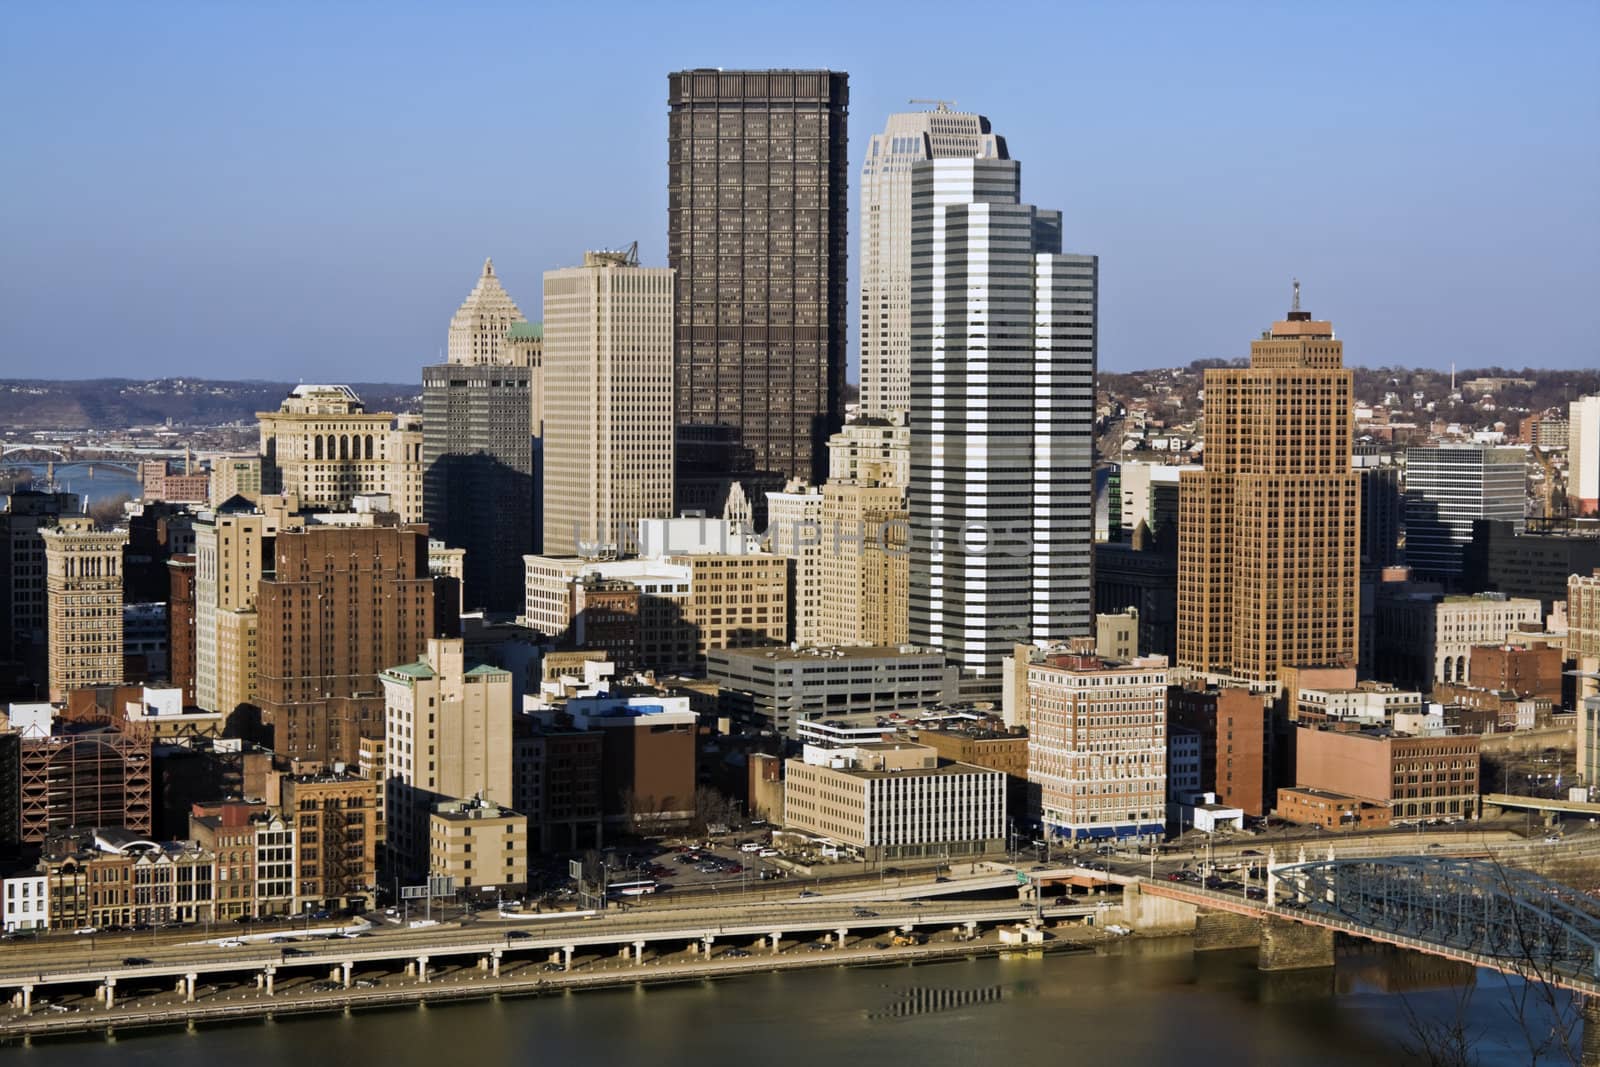 Panorama of Pittsburgh by benkrut